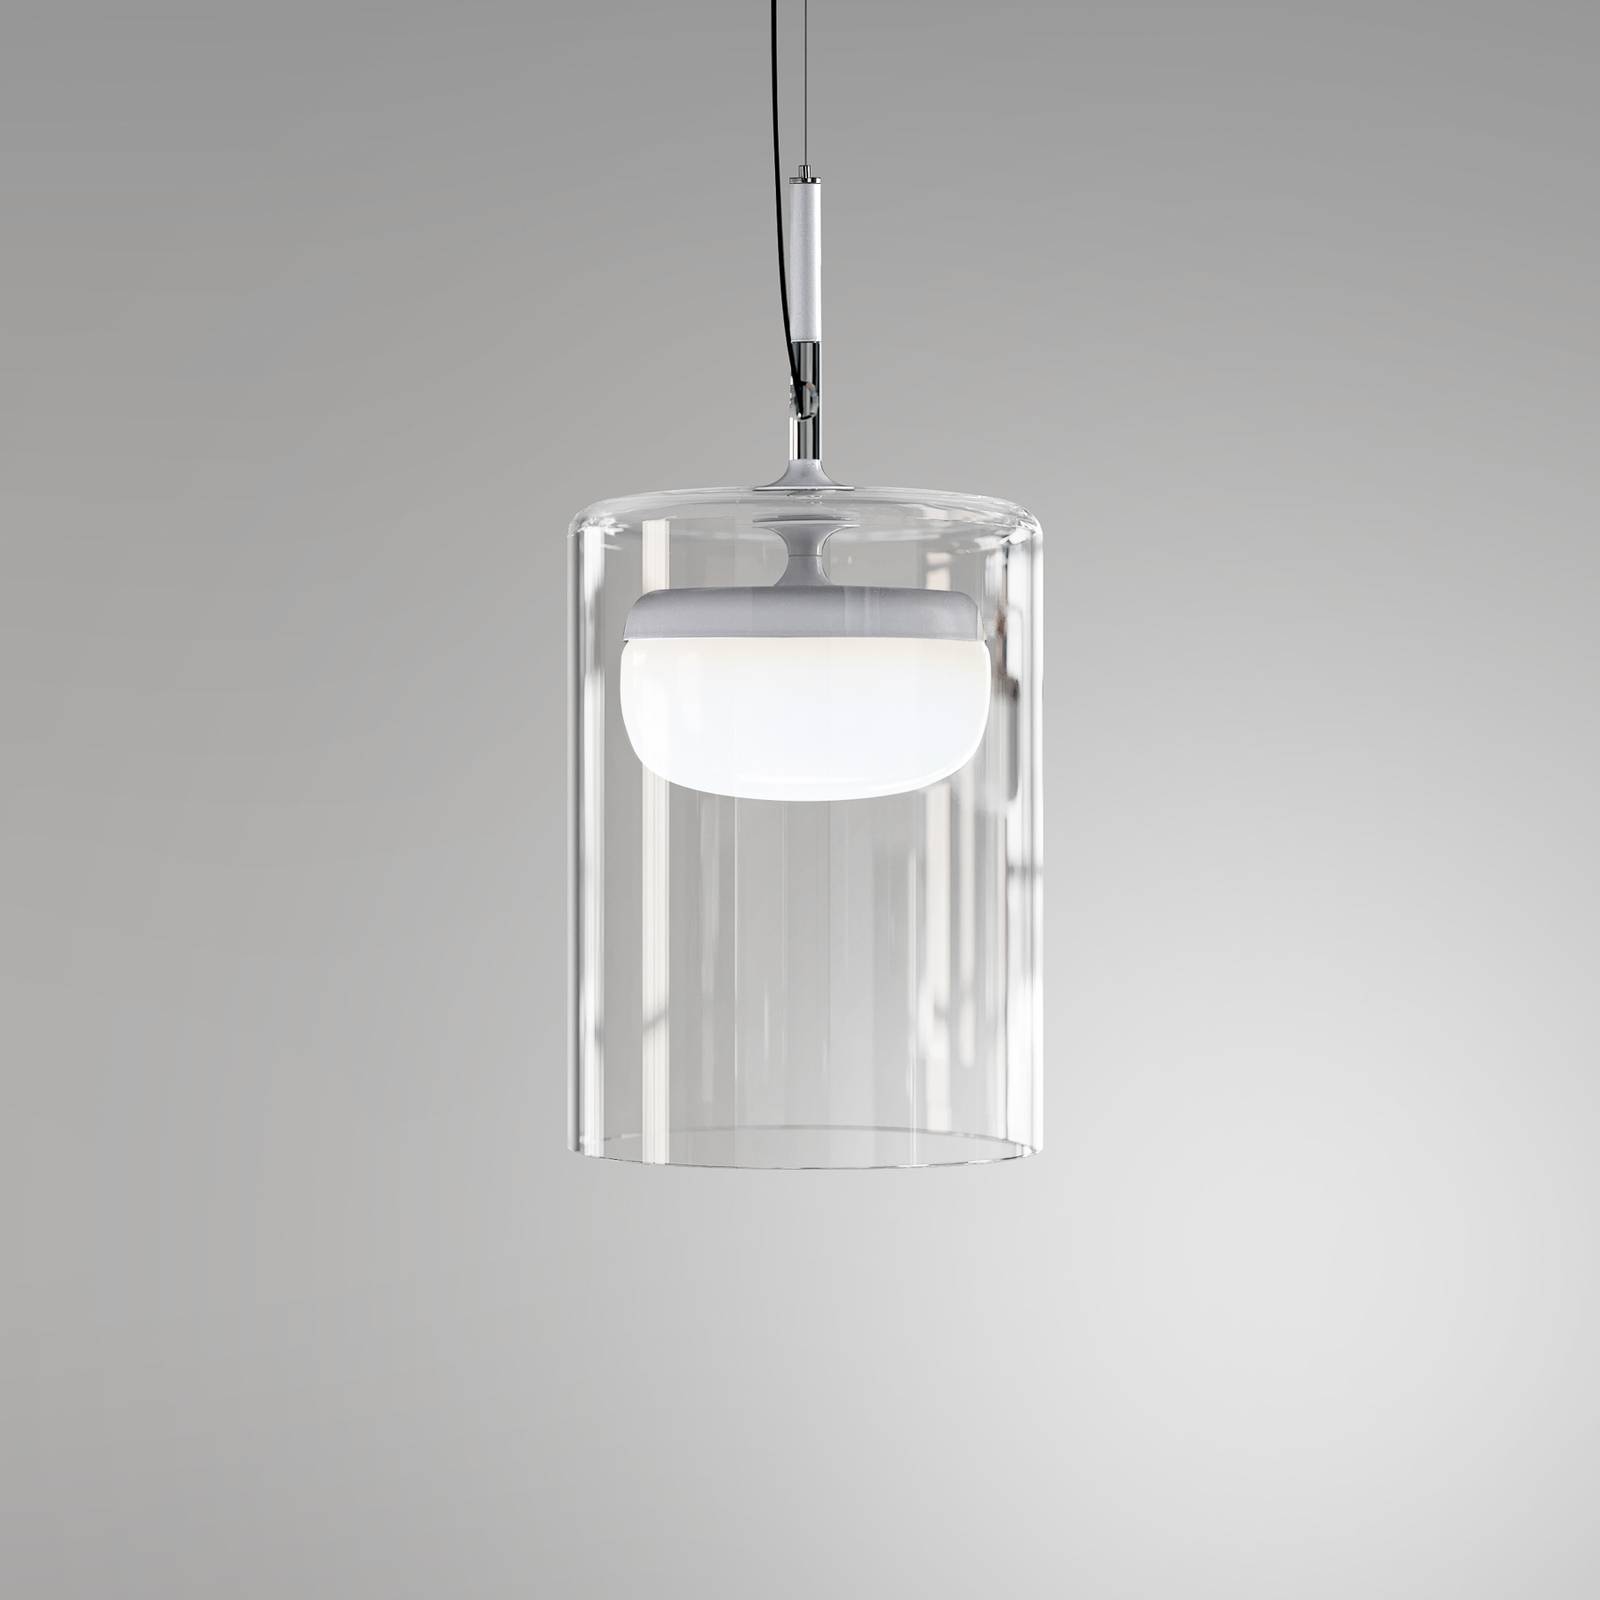 Prandina Diver suspension LED S1 2 700 K blanche